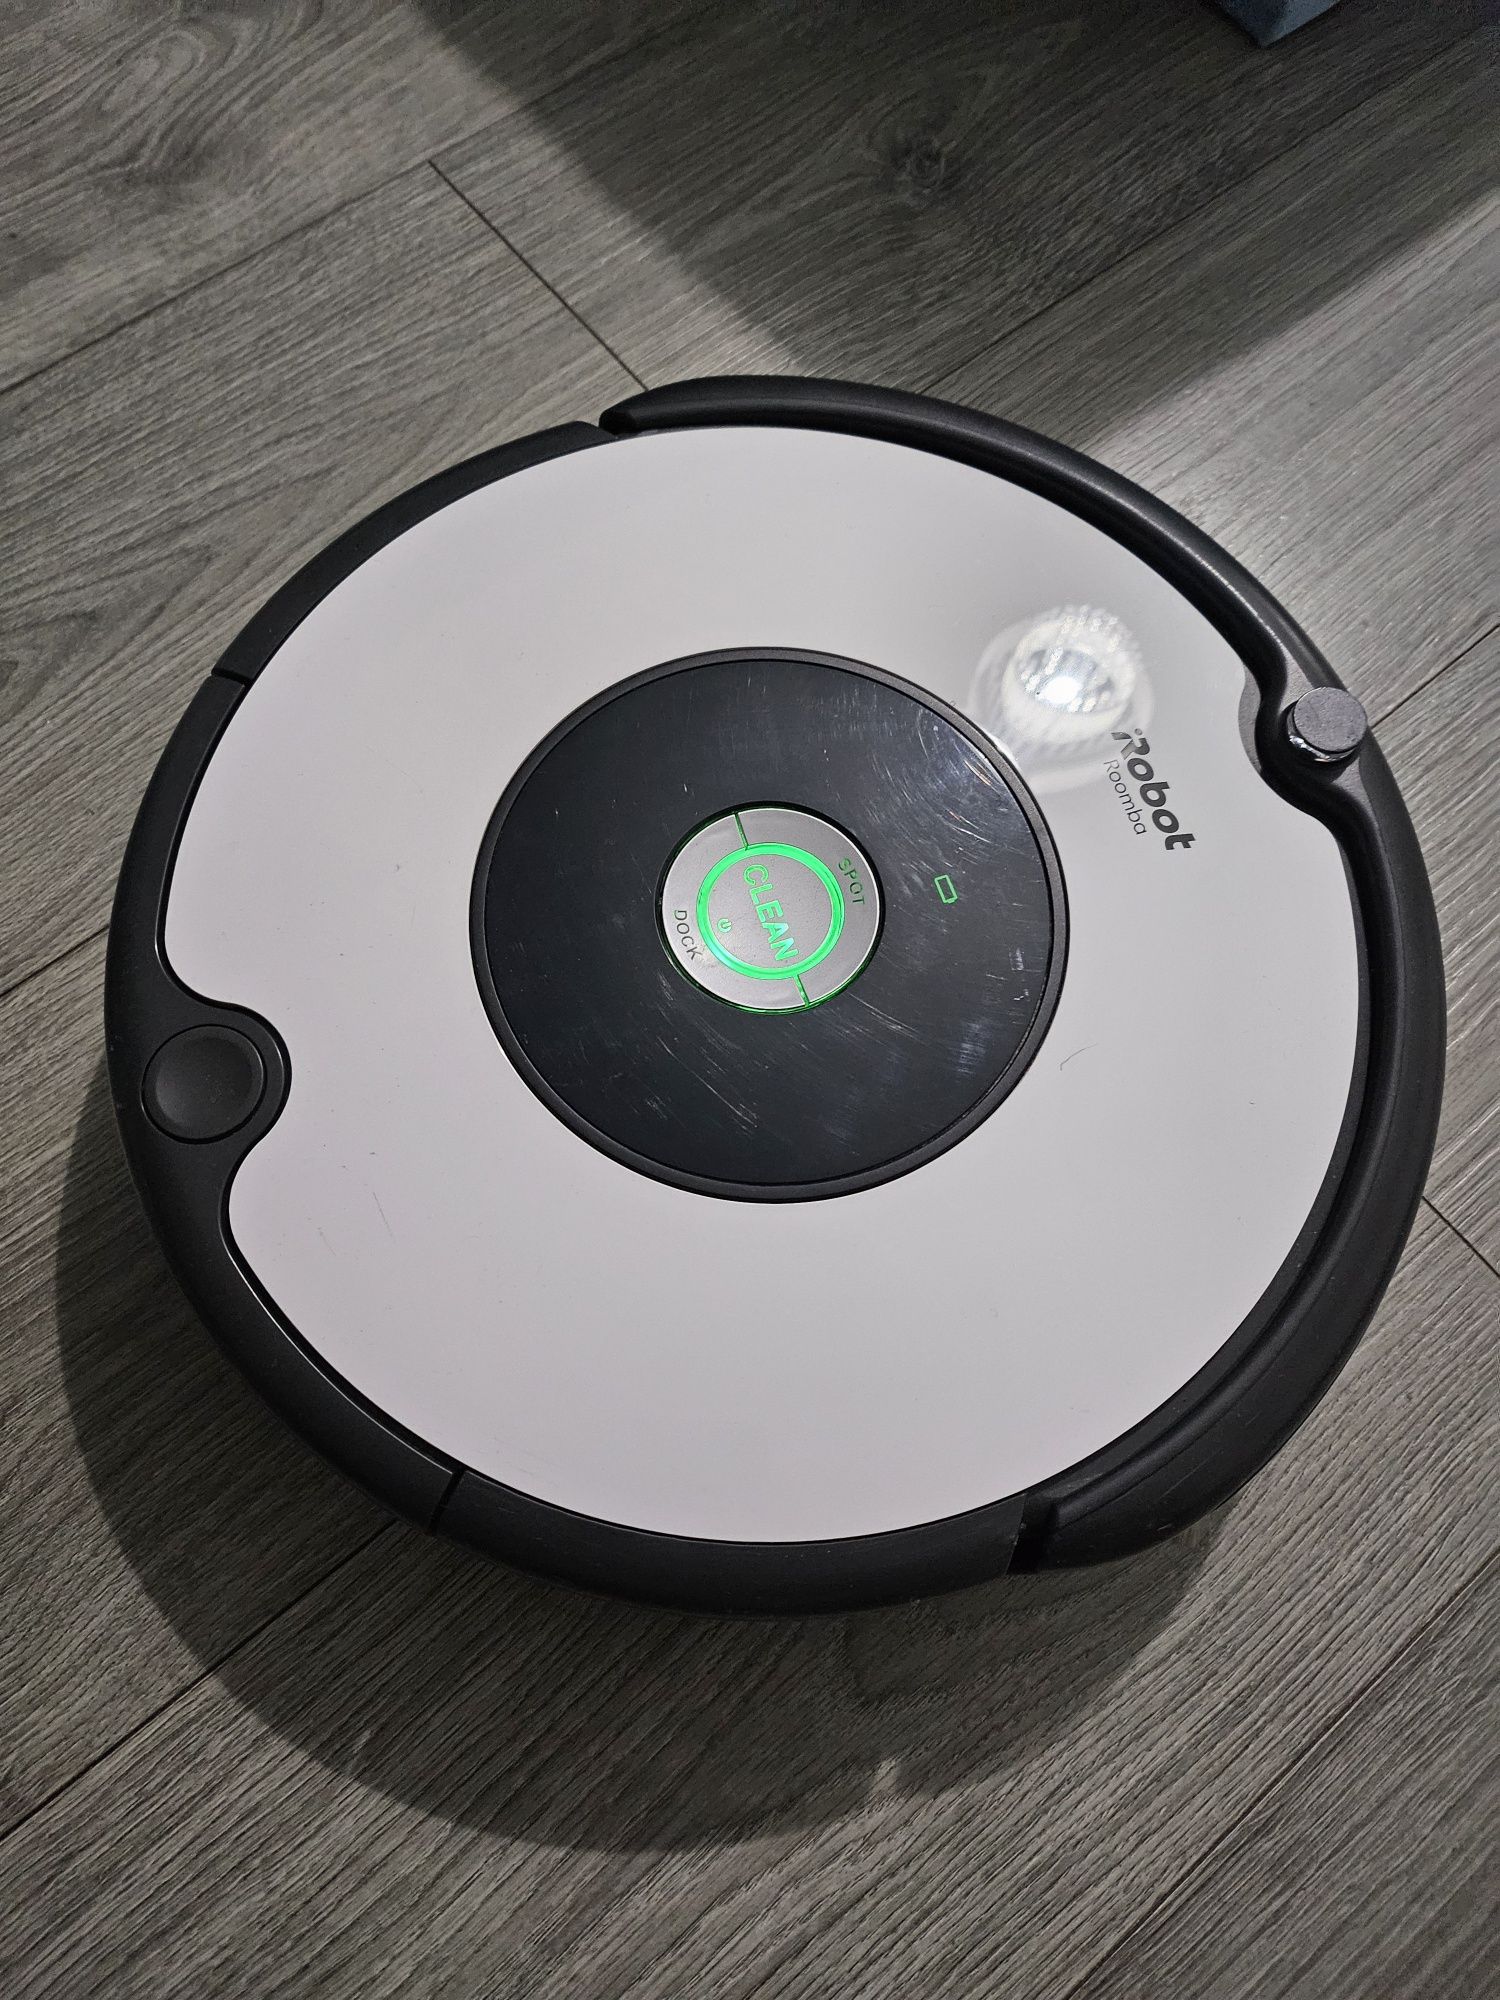 IRobot Roomba model 605